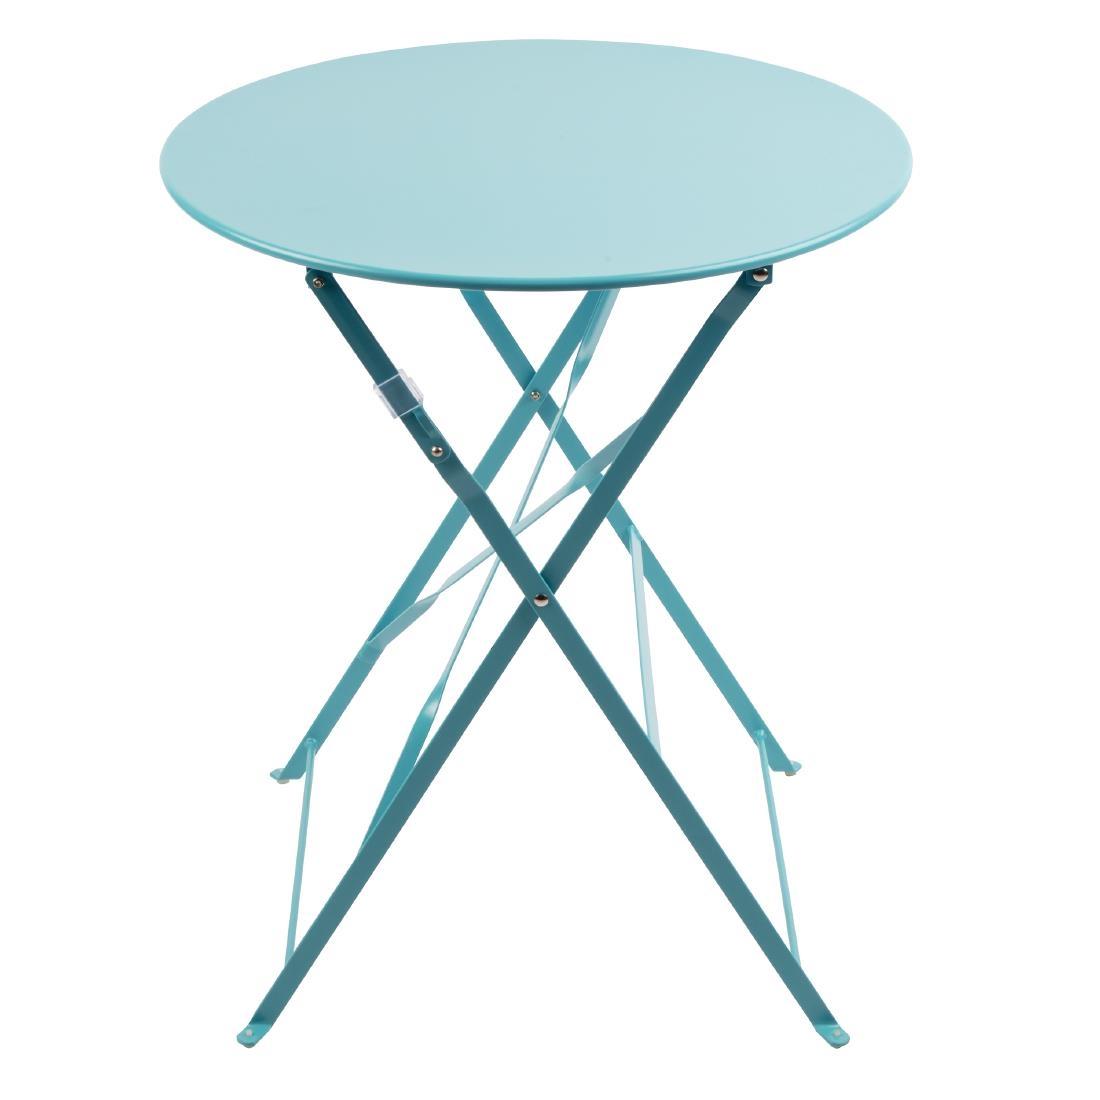 Bolero  Round Pavement Style Steel Table Seaside Blue 595mm - GK983  - 3